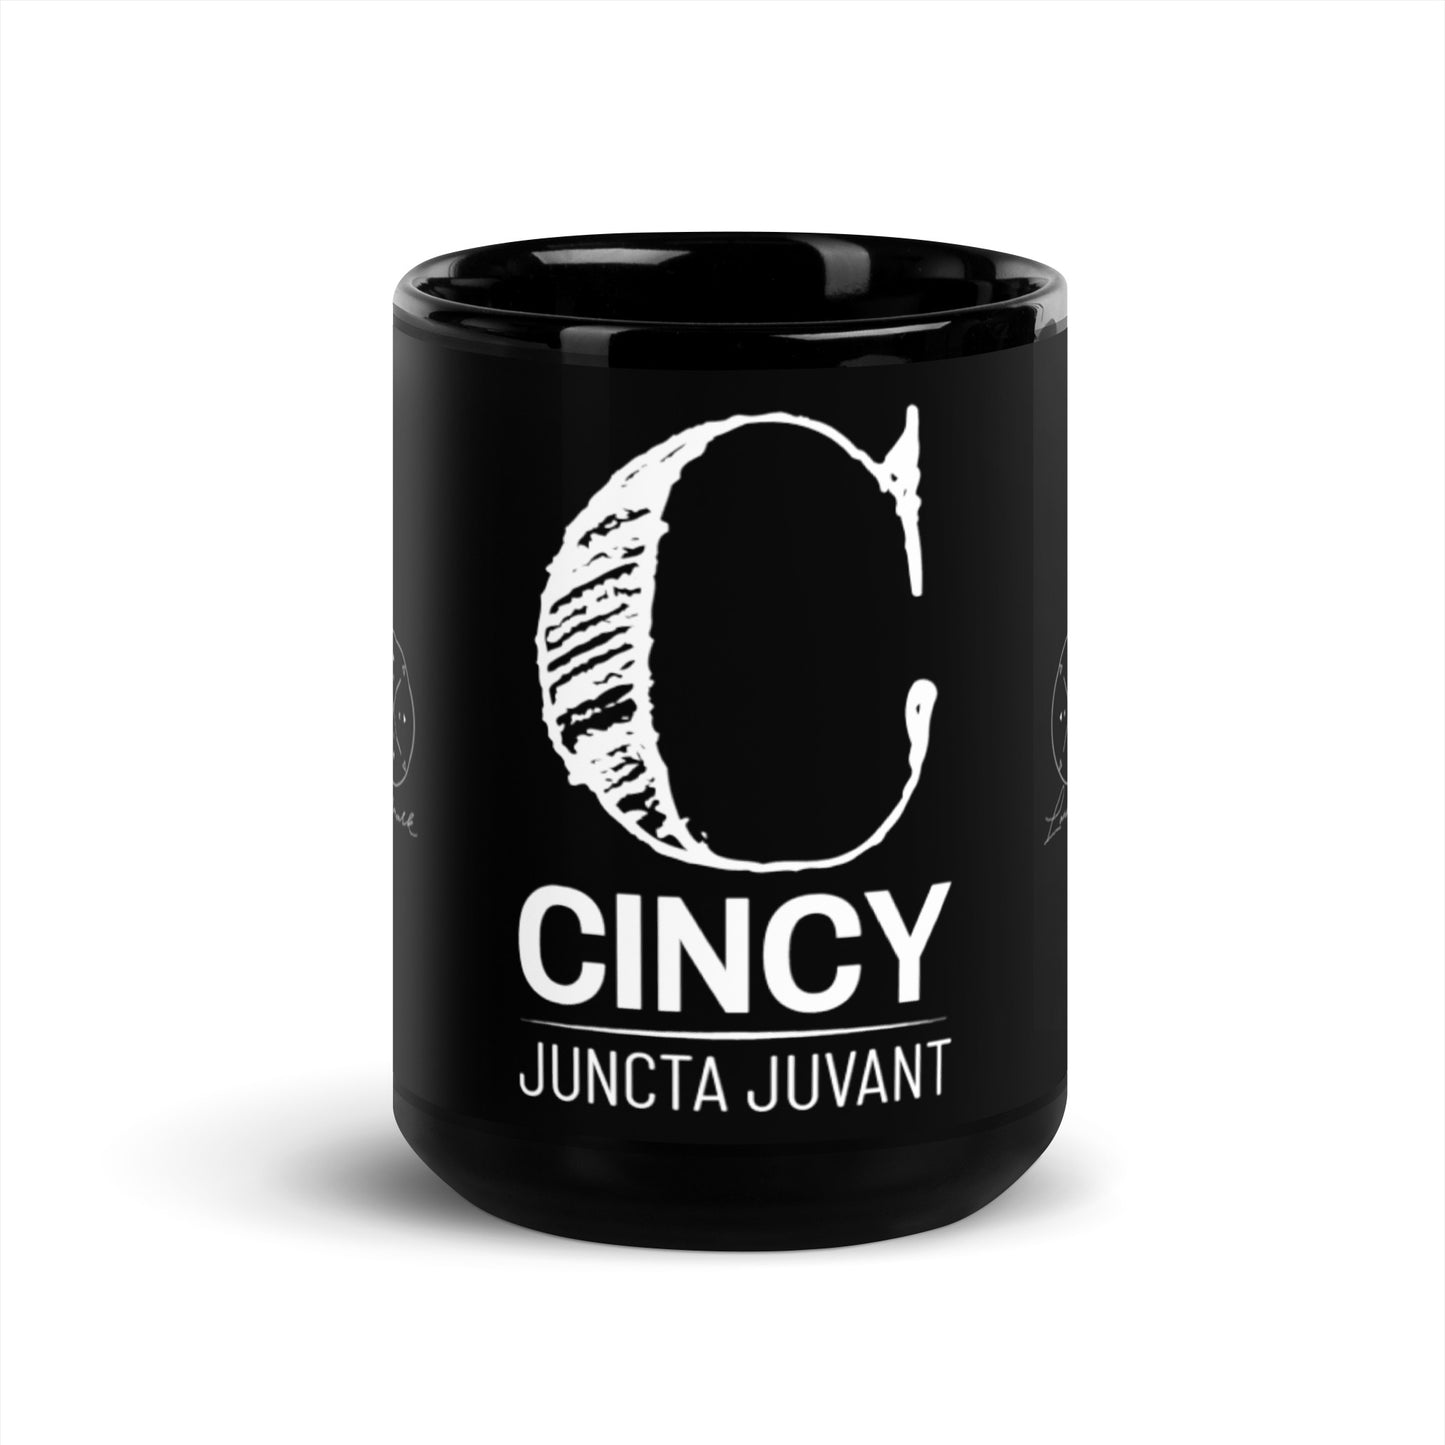 Cincy Juncta Juvant - Black Glossy Mug